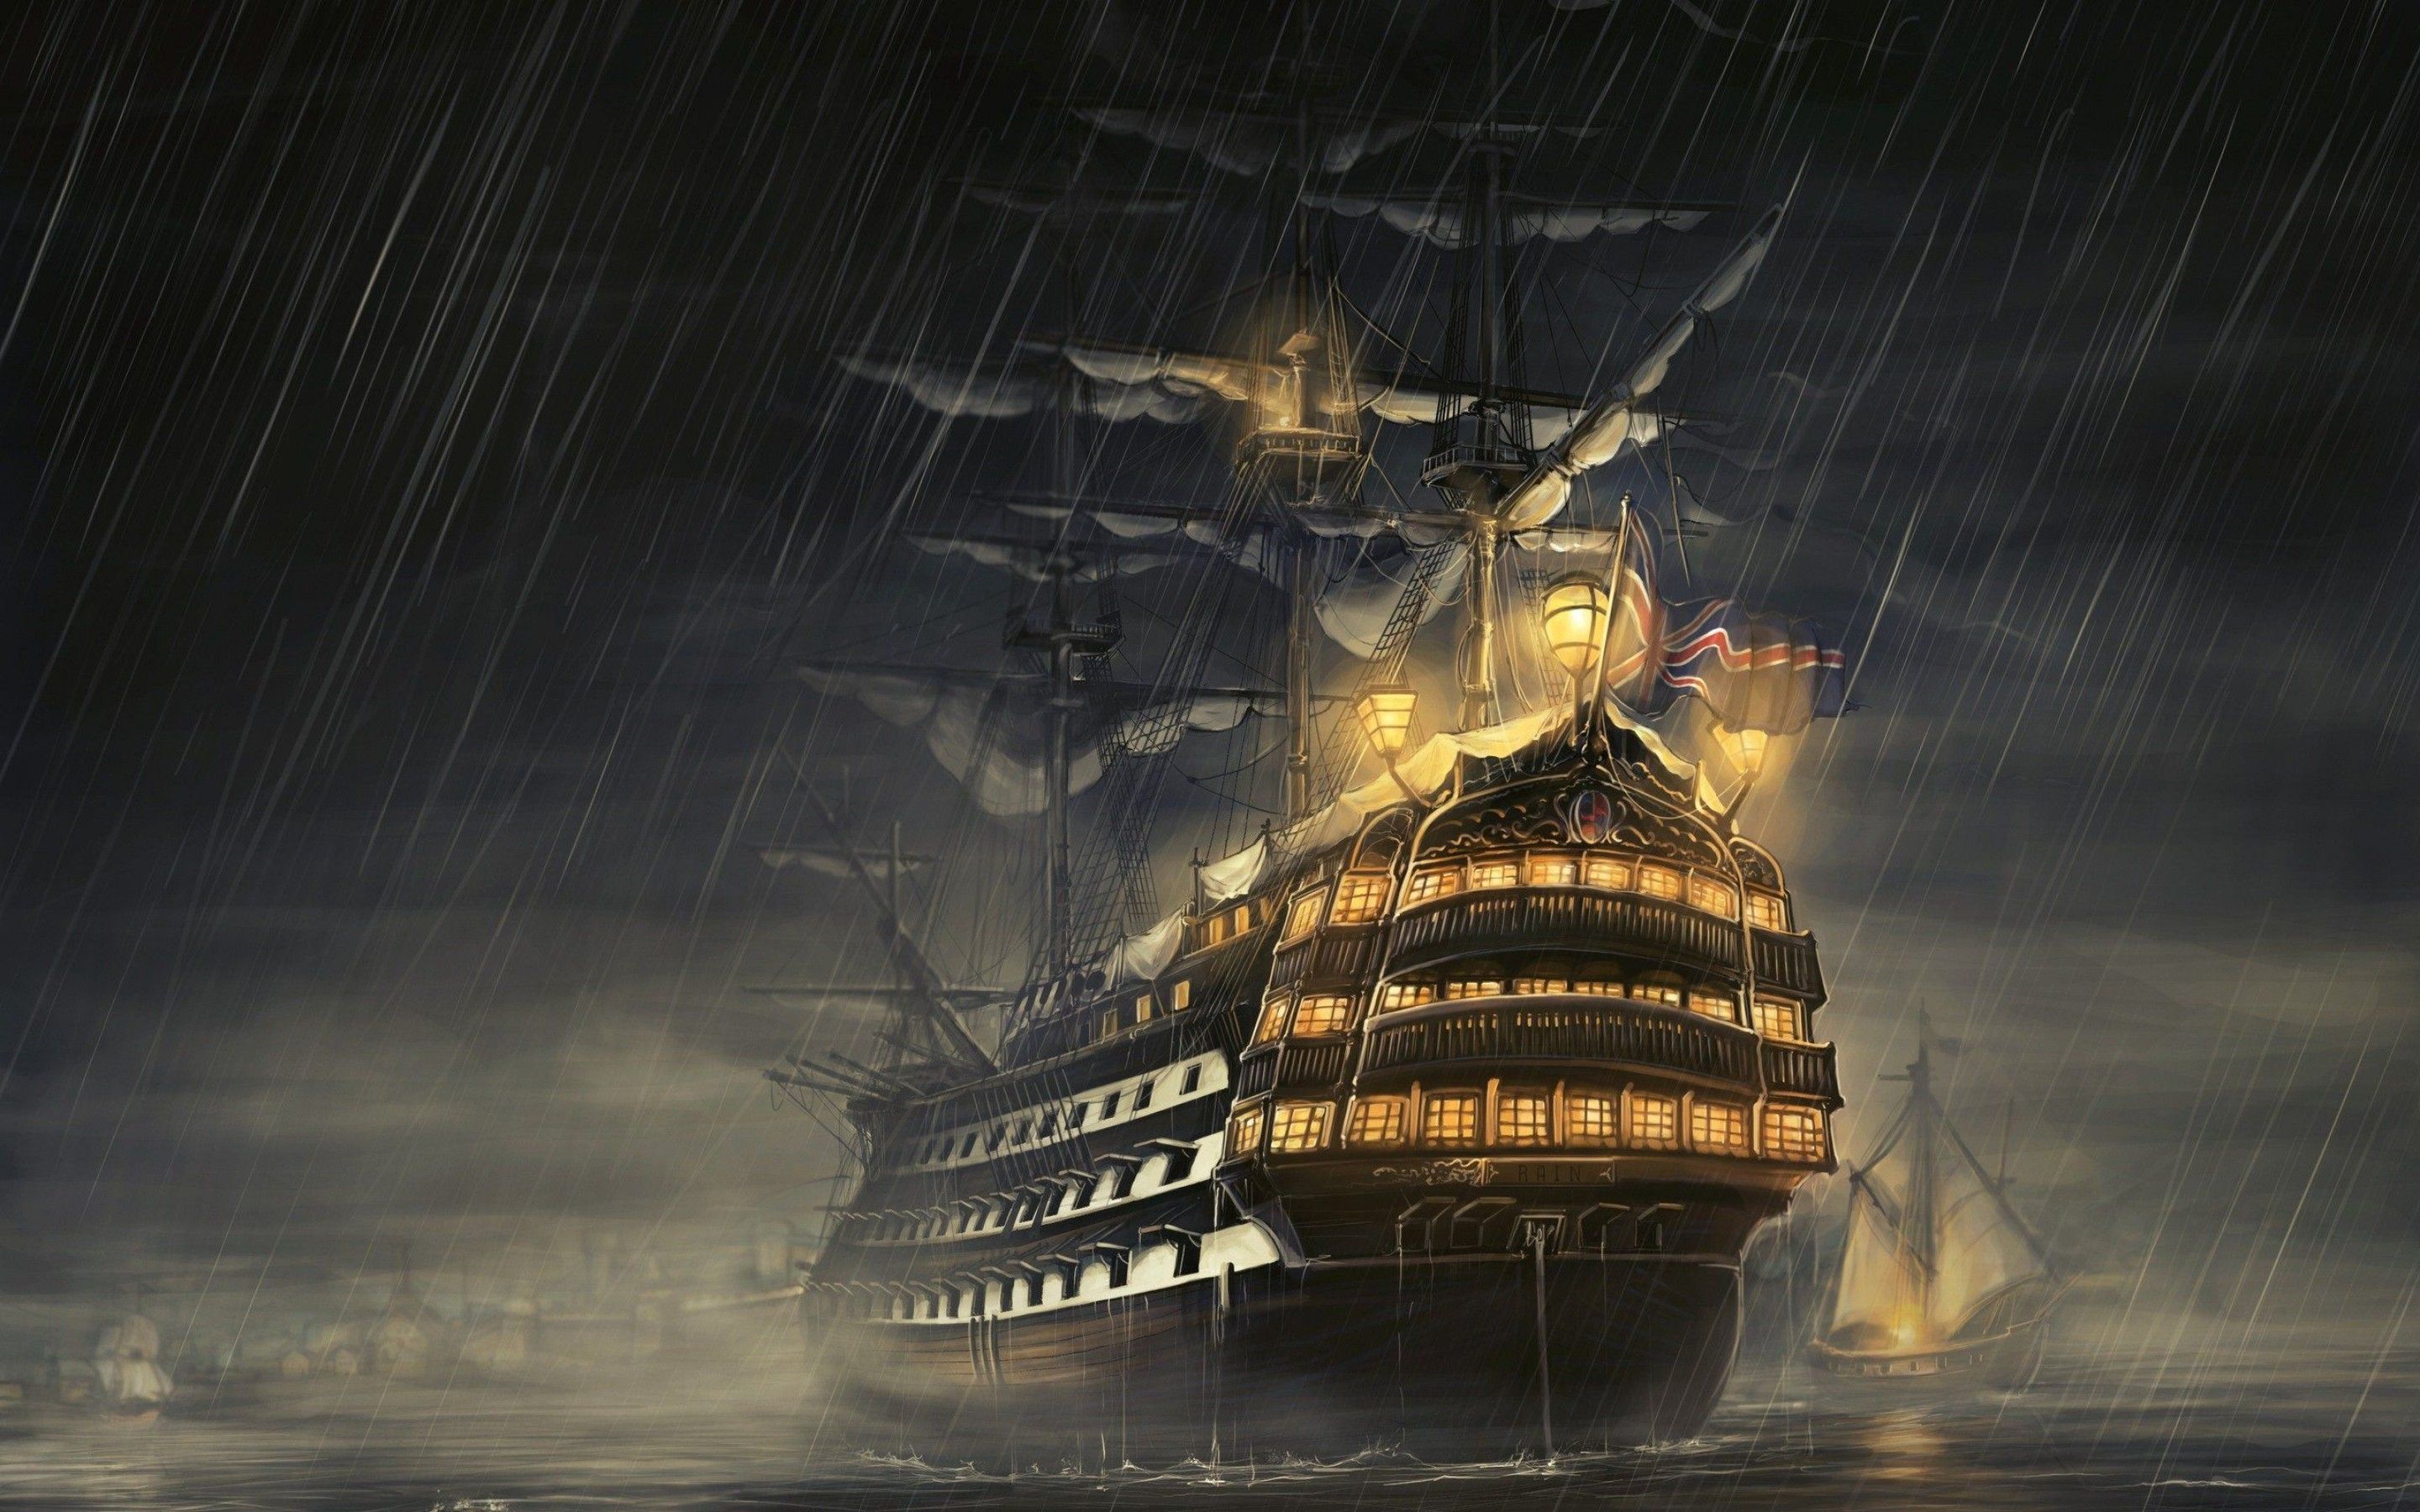 Louis Garneray: Sailing Ship. | ART | Pinterest | Sailing ships ...